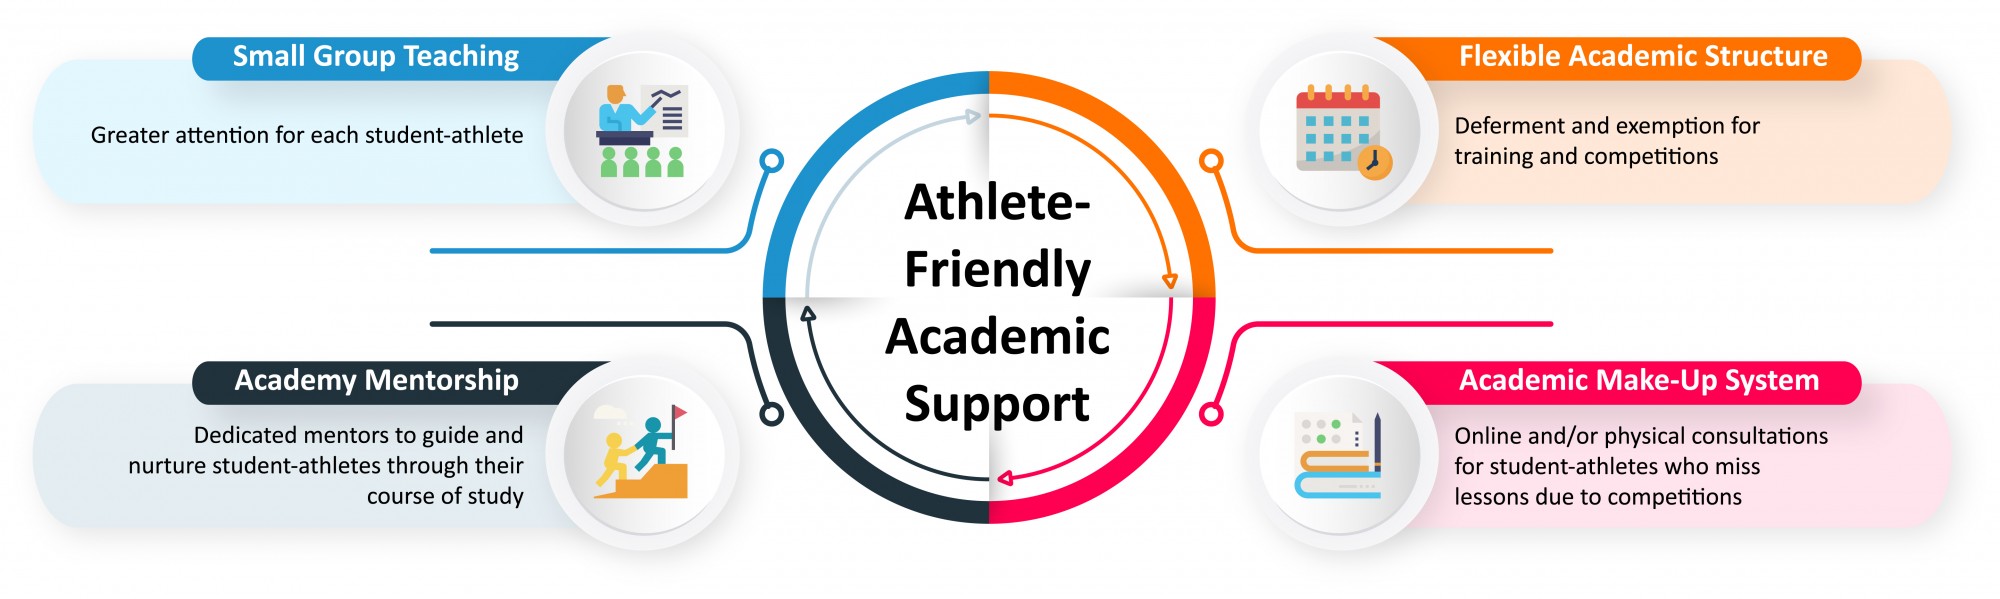 athlete-friendly academic support v3 high res.jpg